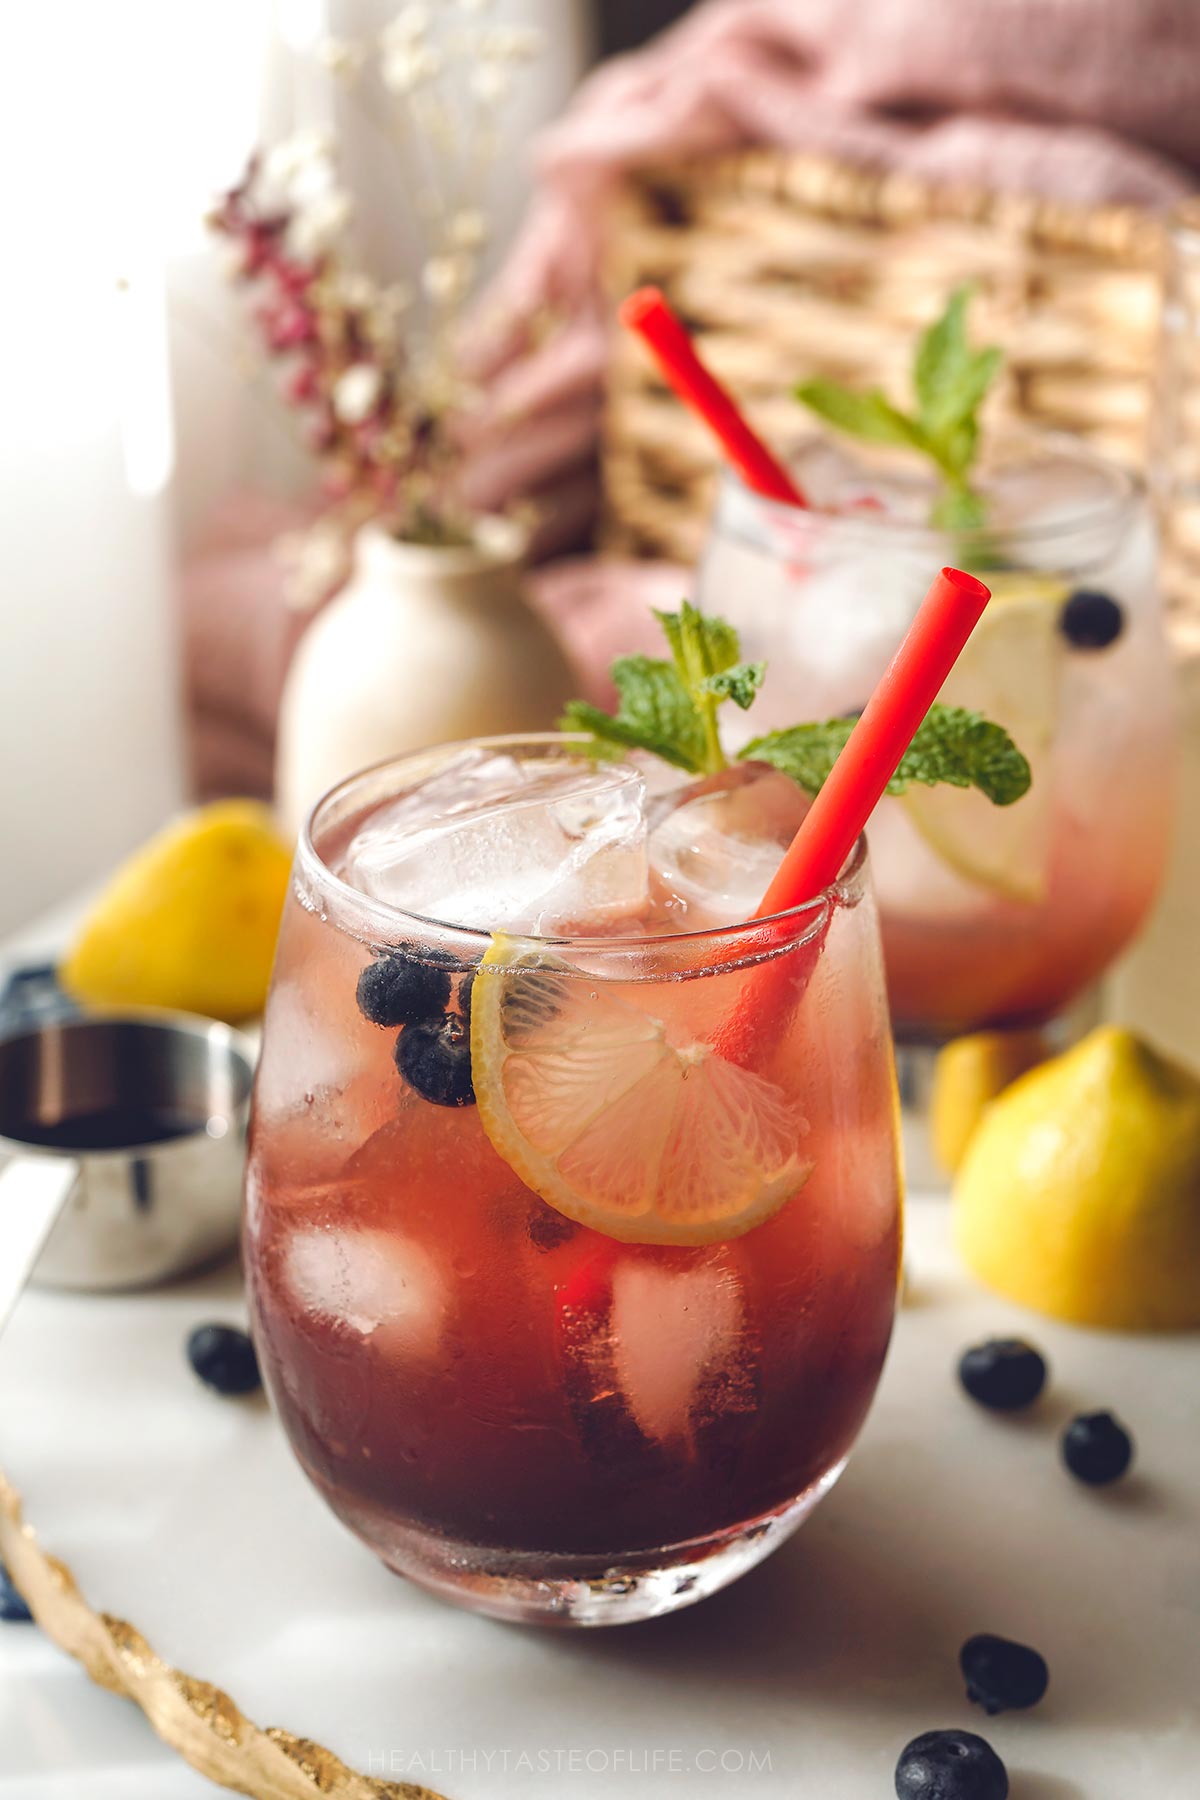 A glass of lemonade with elderberries.